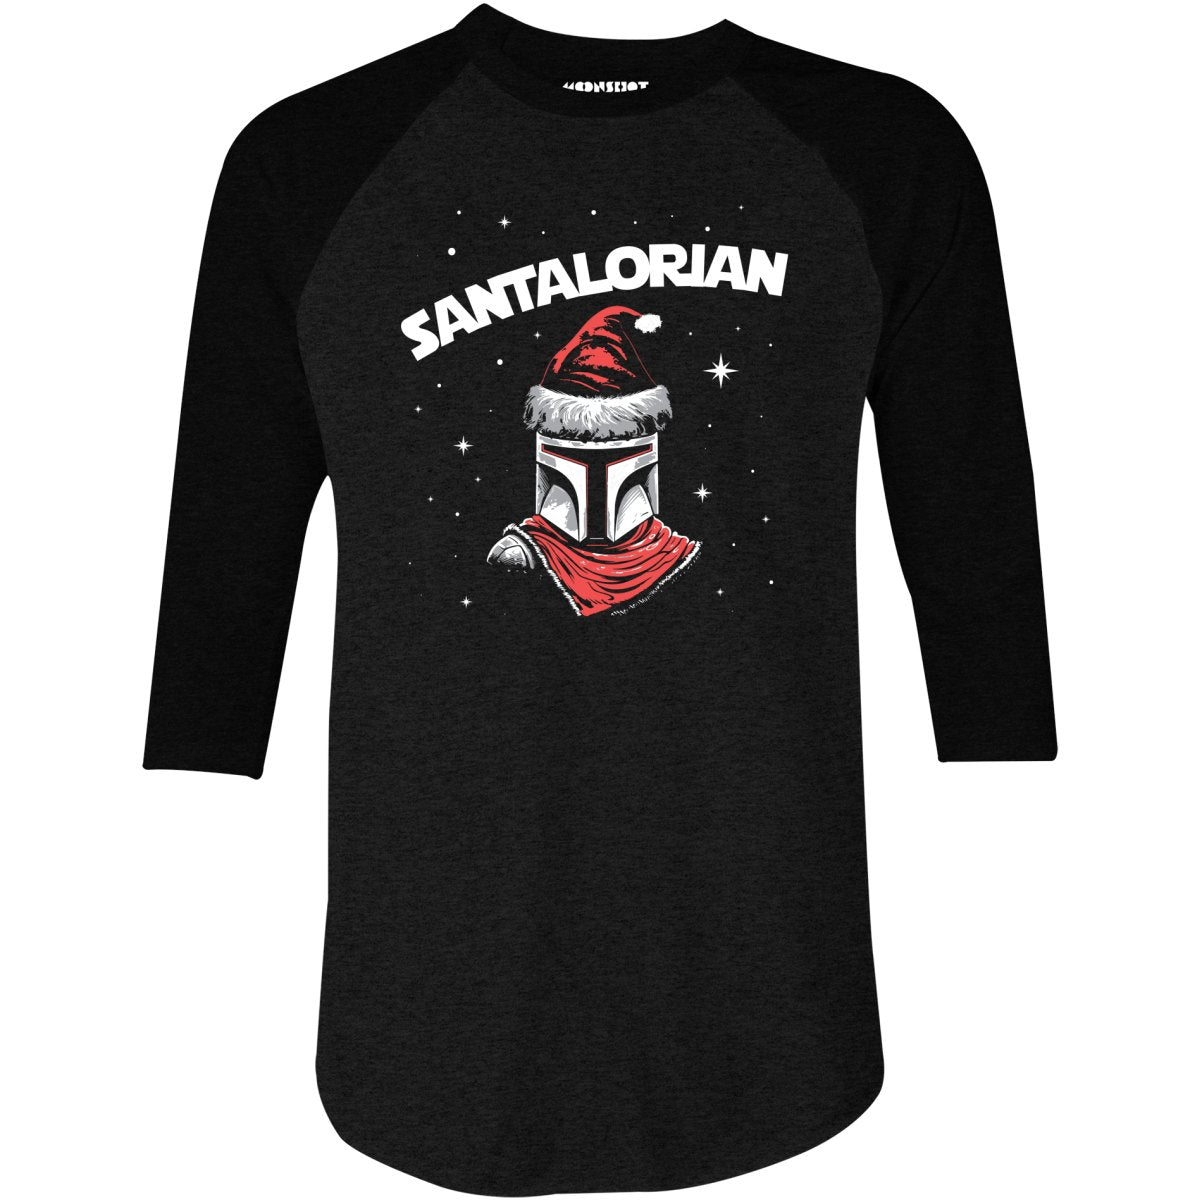 Santalorian - 3/4 Sleeve Raglan T-Shirt